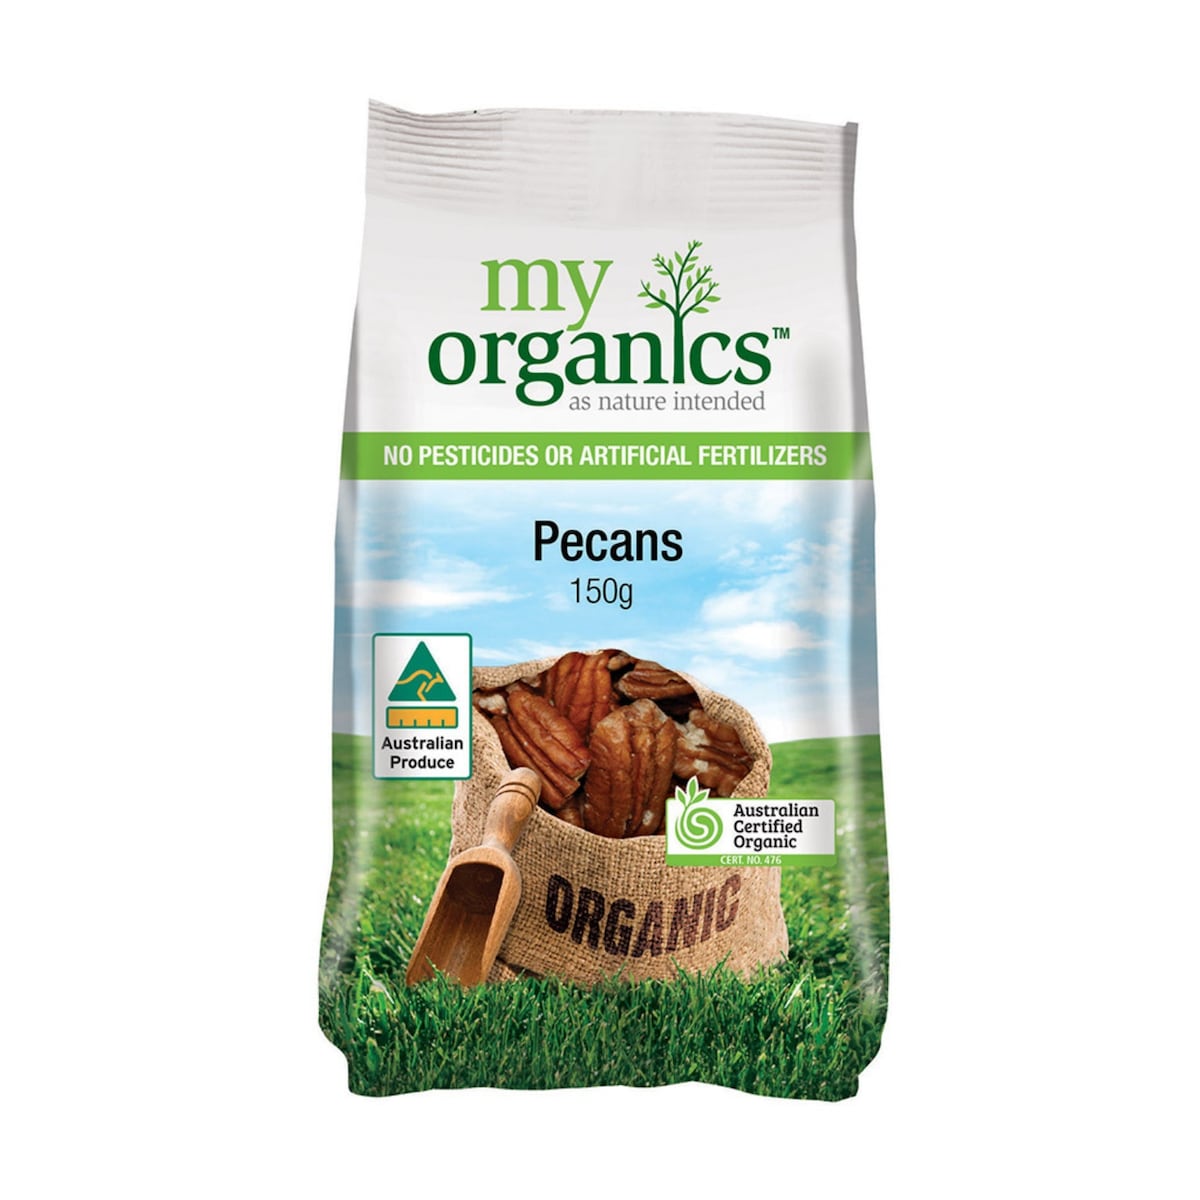 My Organics Pecans 150g